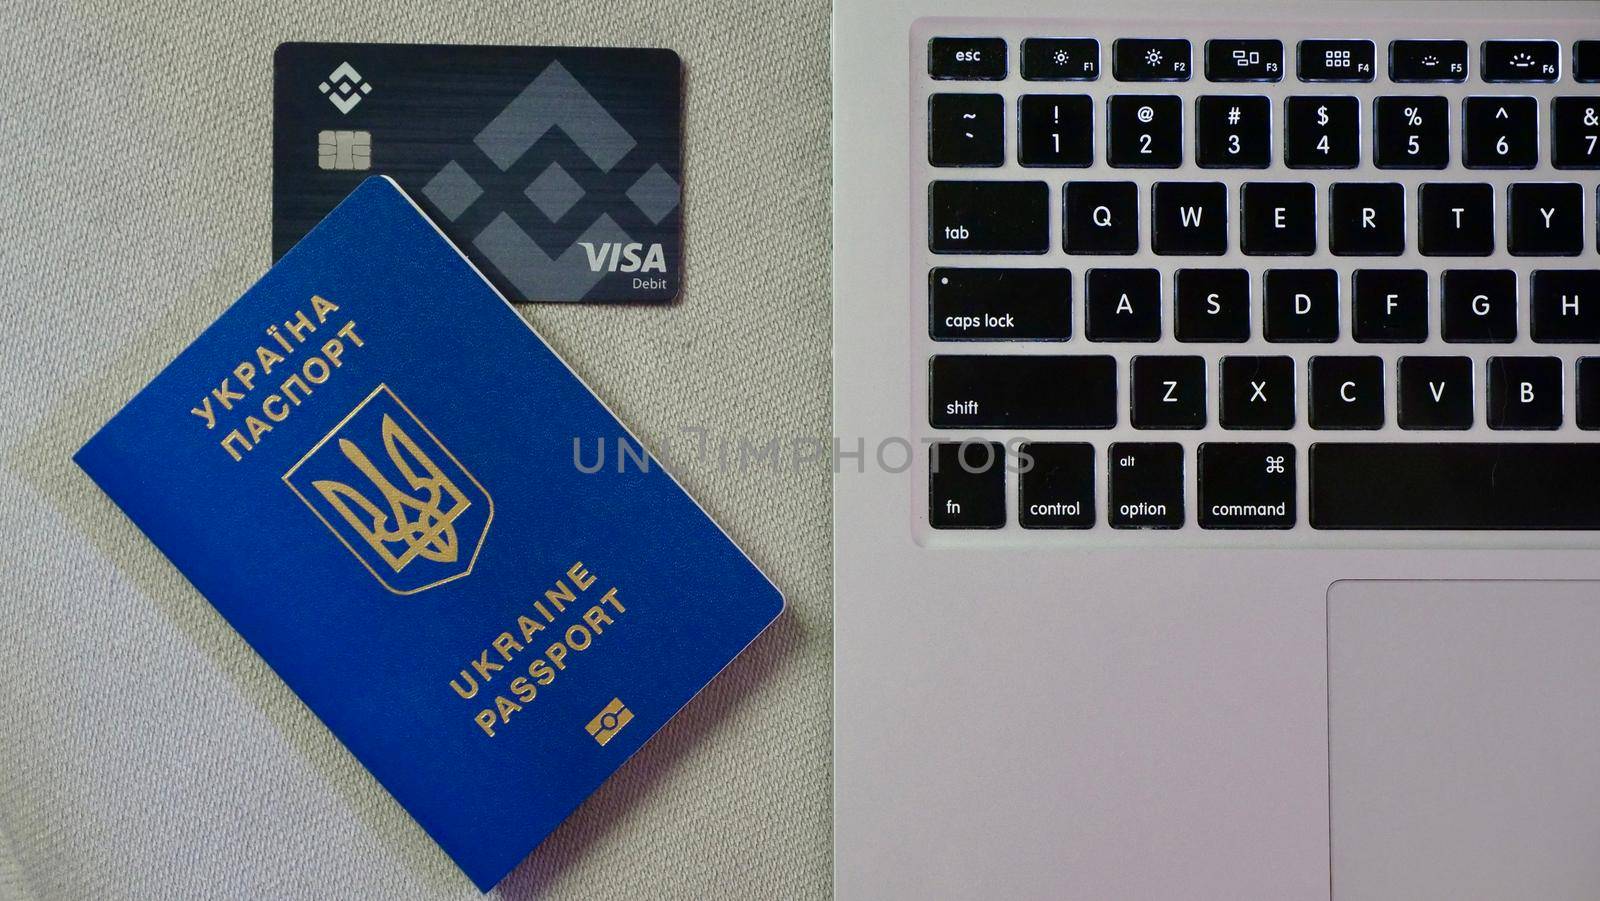 Laptop, Ukrainian passport, card binance to buy bitcoin crypto exchange for support Ukraine during the market crash, war . Trading, spot, staking. Workspace freelance flatlay